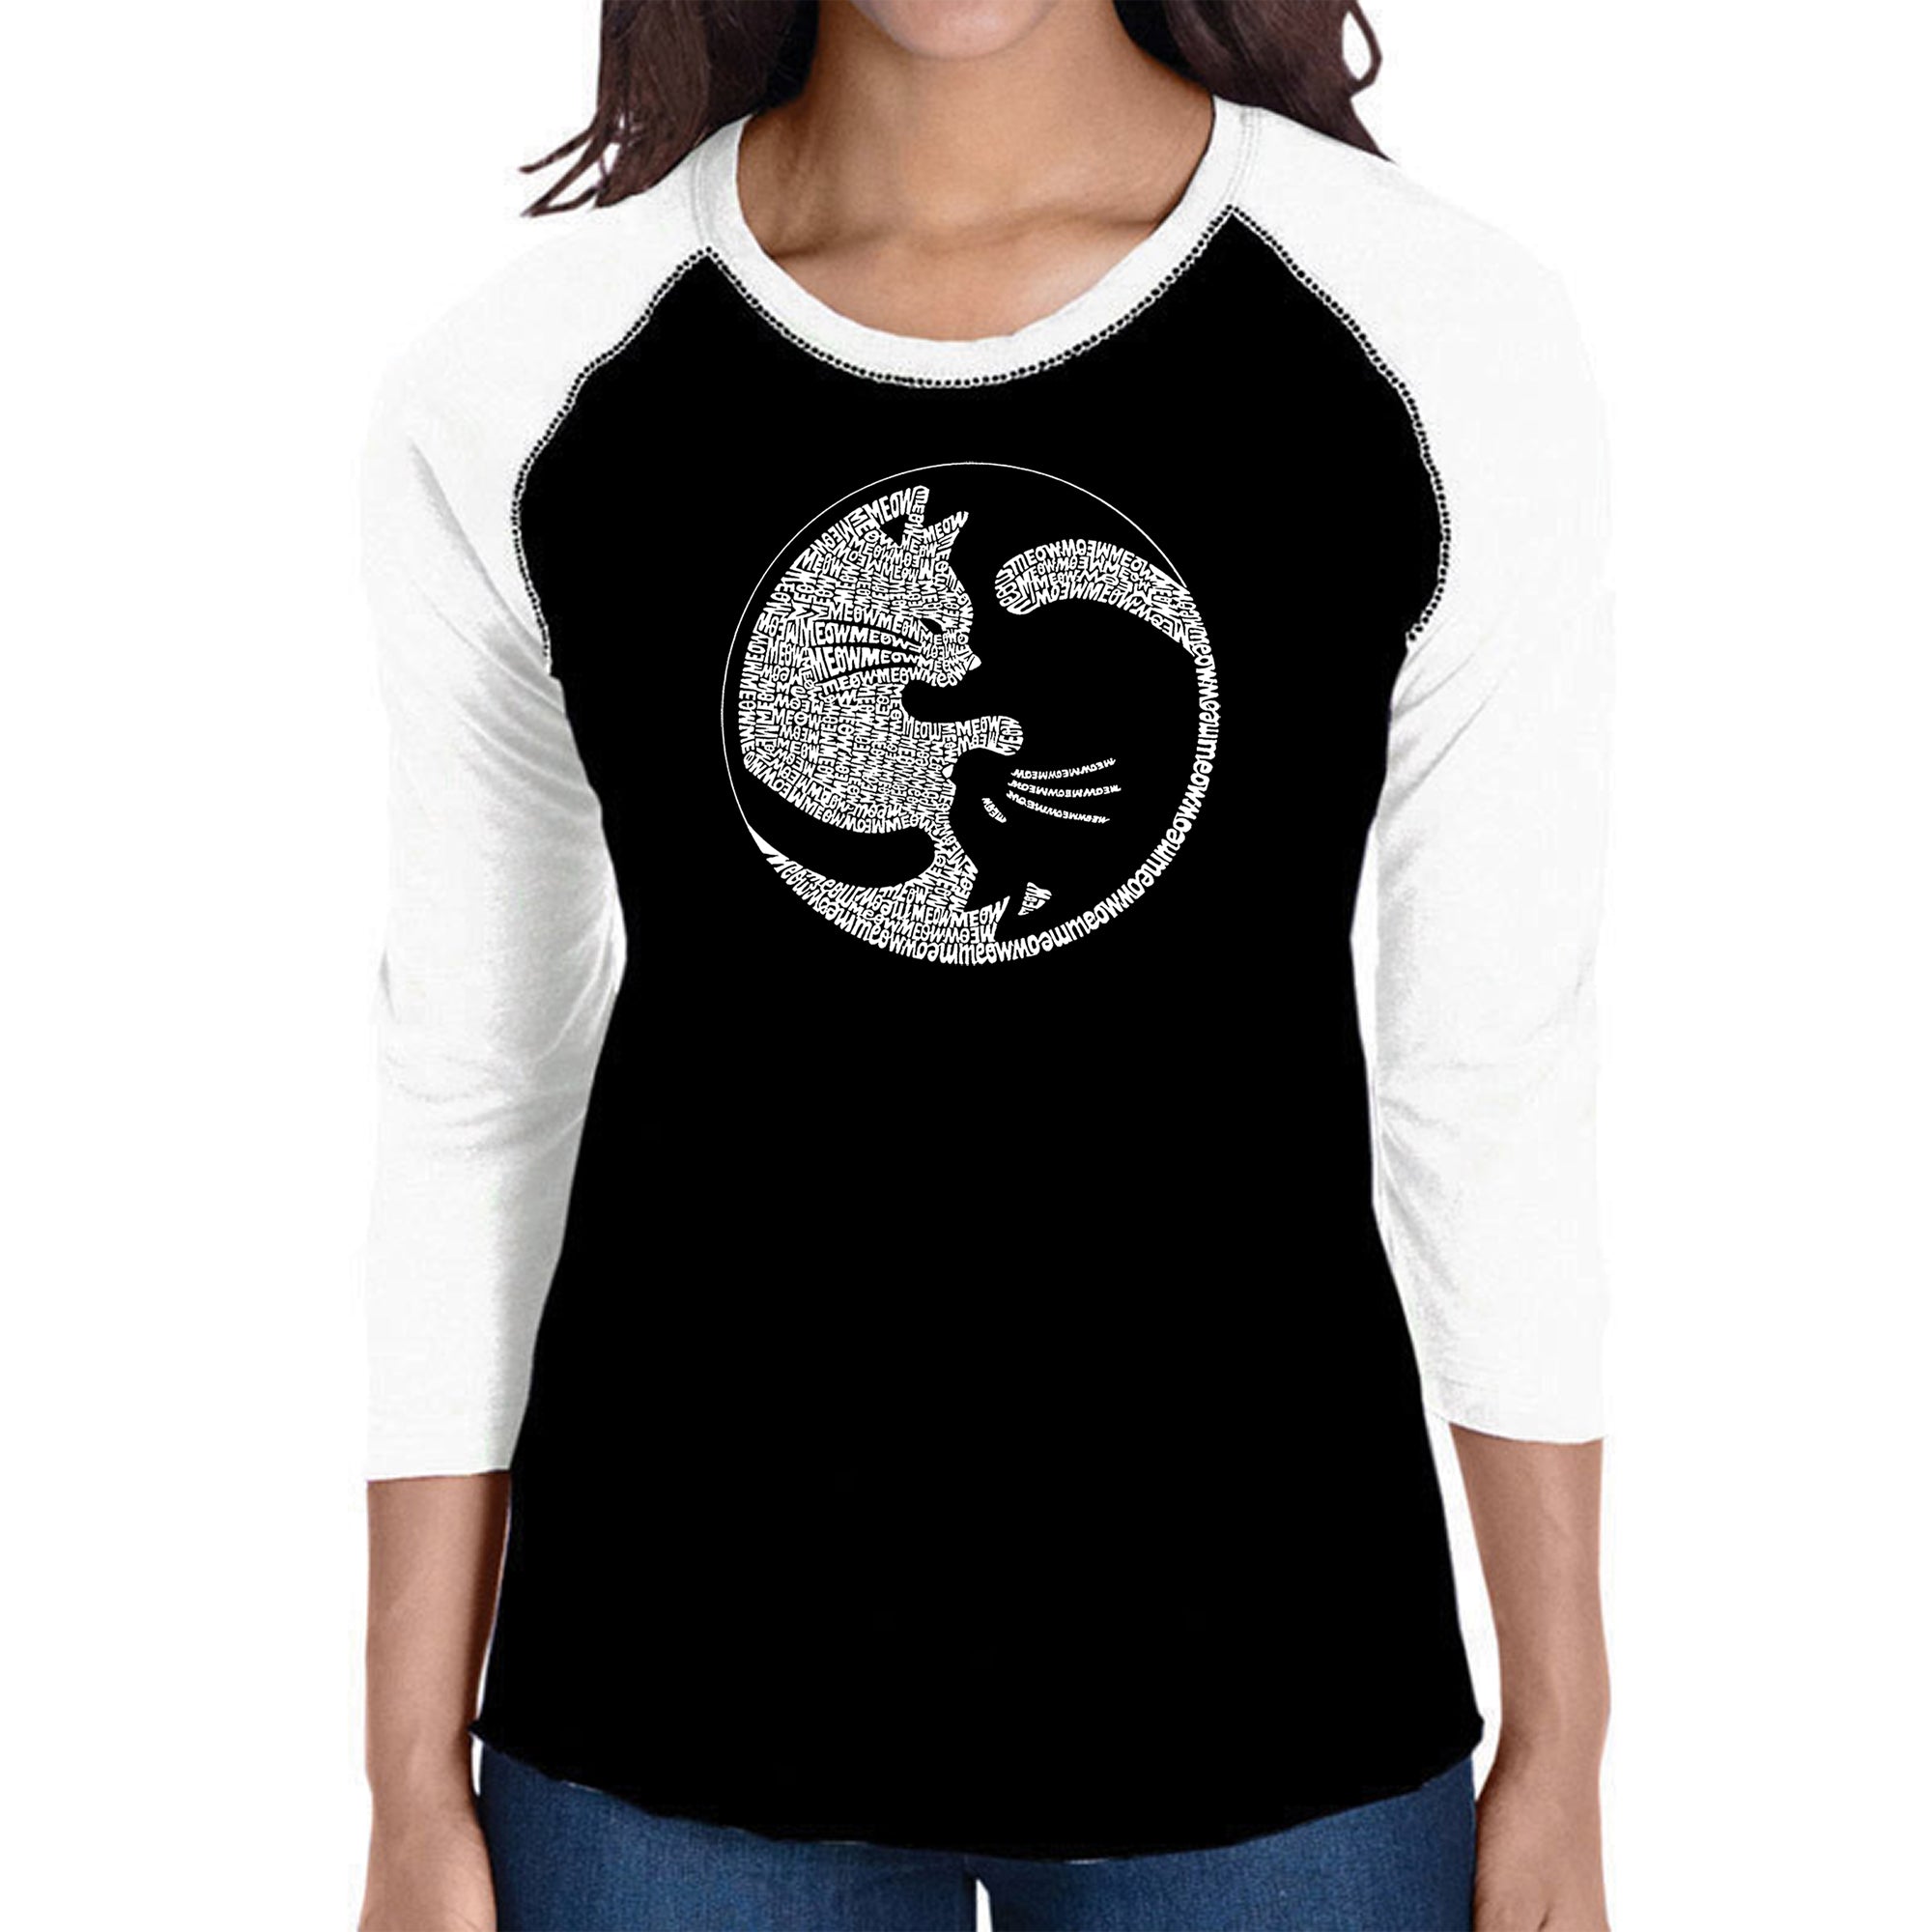 Yin Yang Cat - Women's Raglan Word Art T-Shirt - Black/White - Large